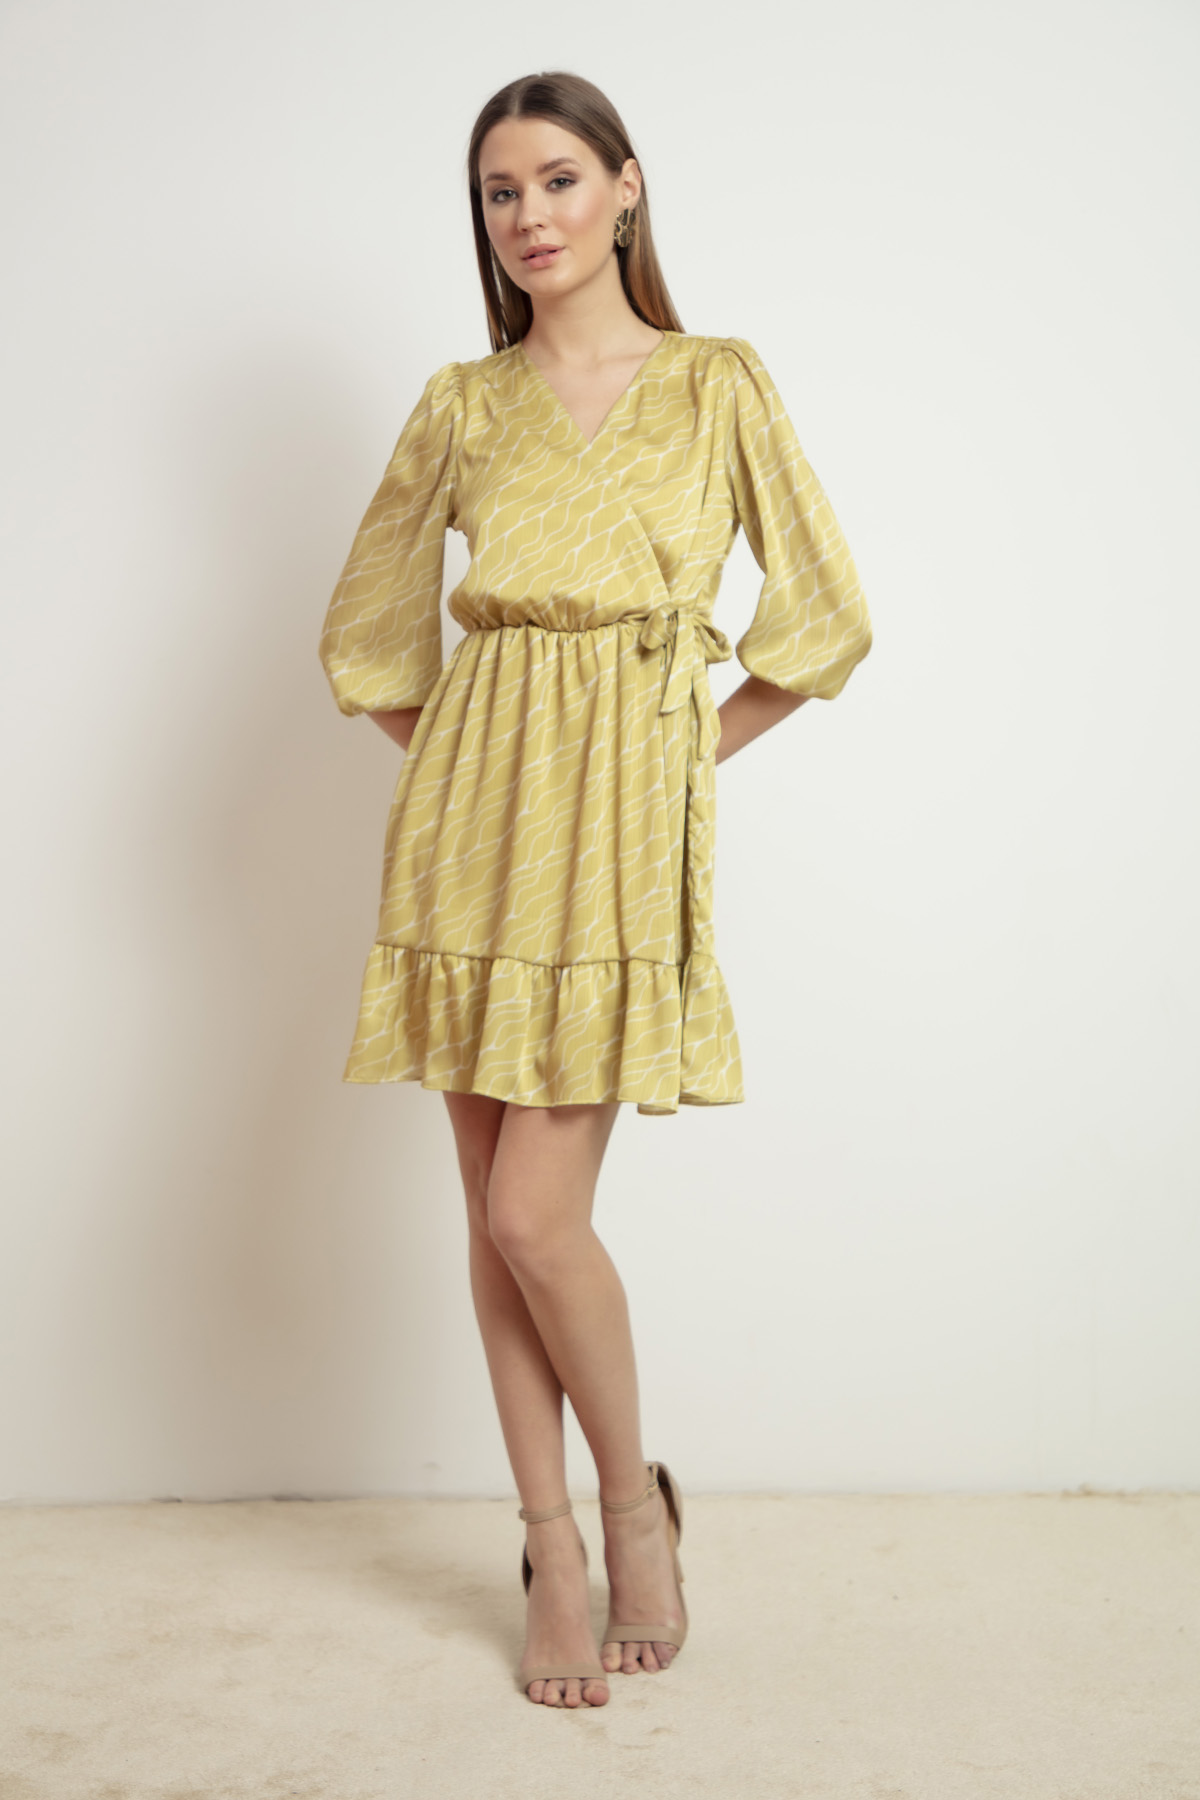 Women's Yellow Patterned Dress